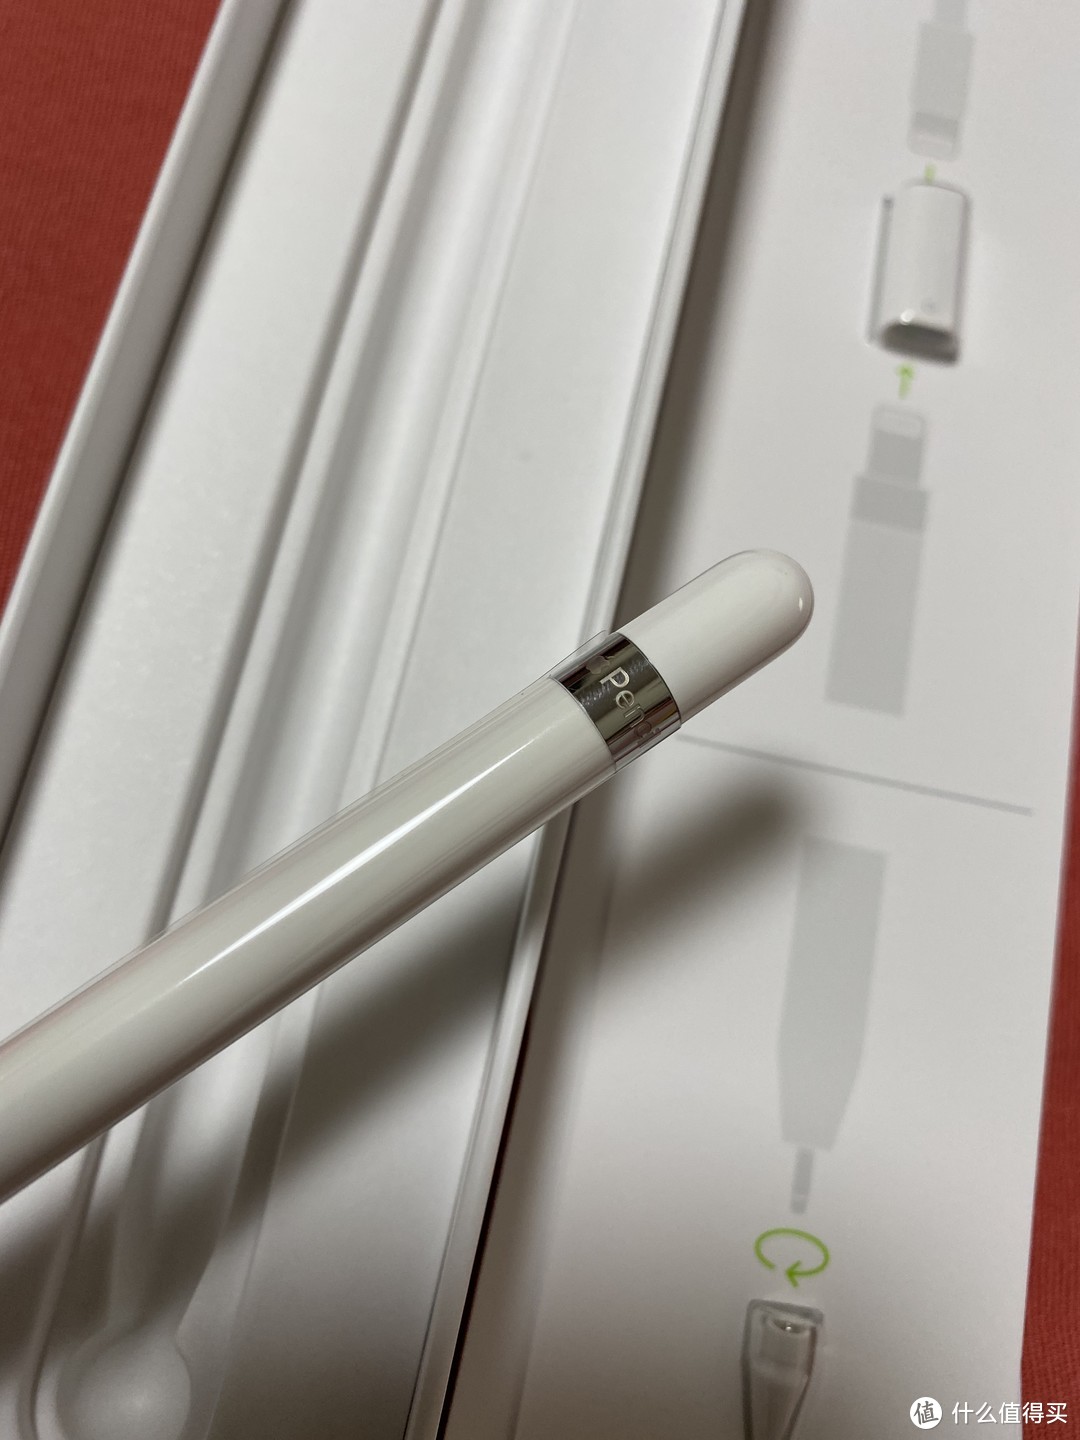 ￥2599 Ipad8(2020)+￥555 Apple pencil 1代——生产力玩具采购记